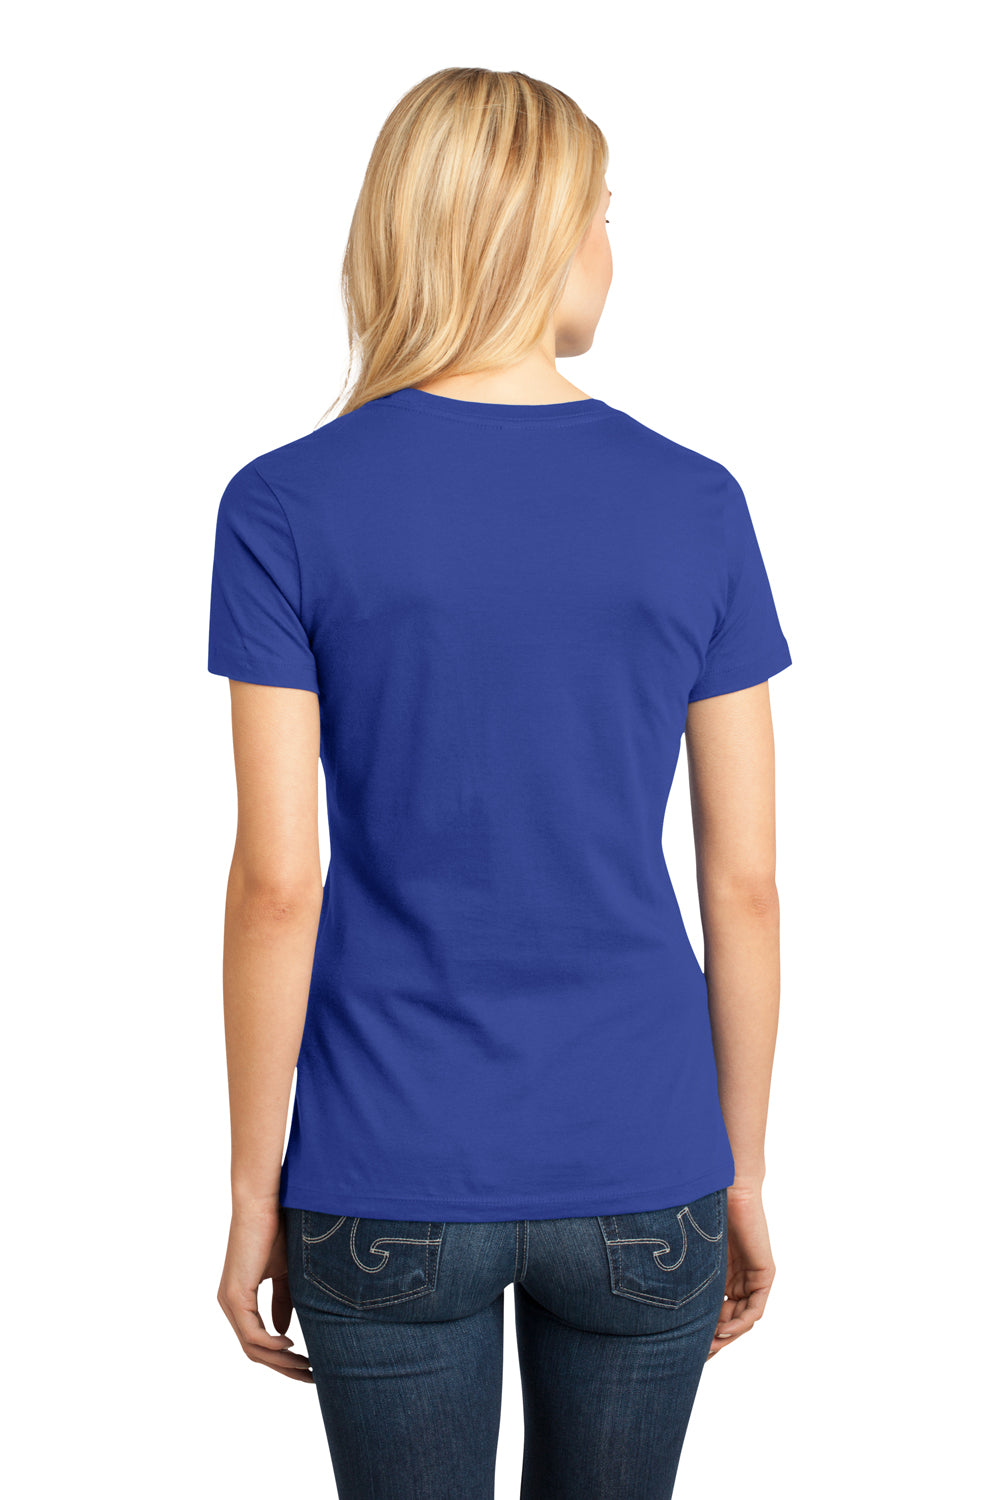 District DM104L Womens Perfect Weight Short Sleeve Crewneck T-Shirt Royal Blue Back